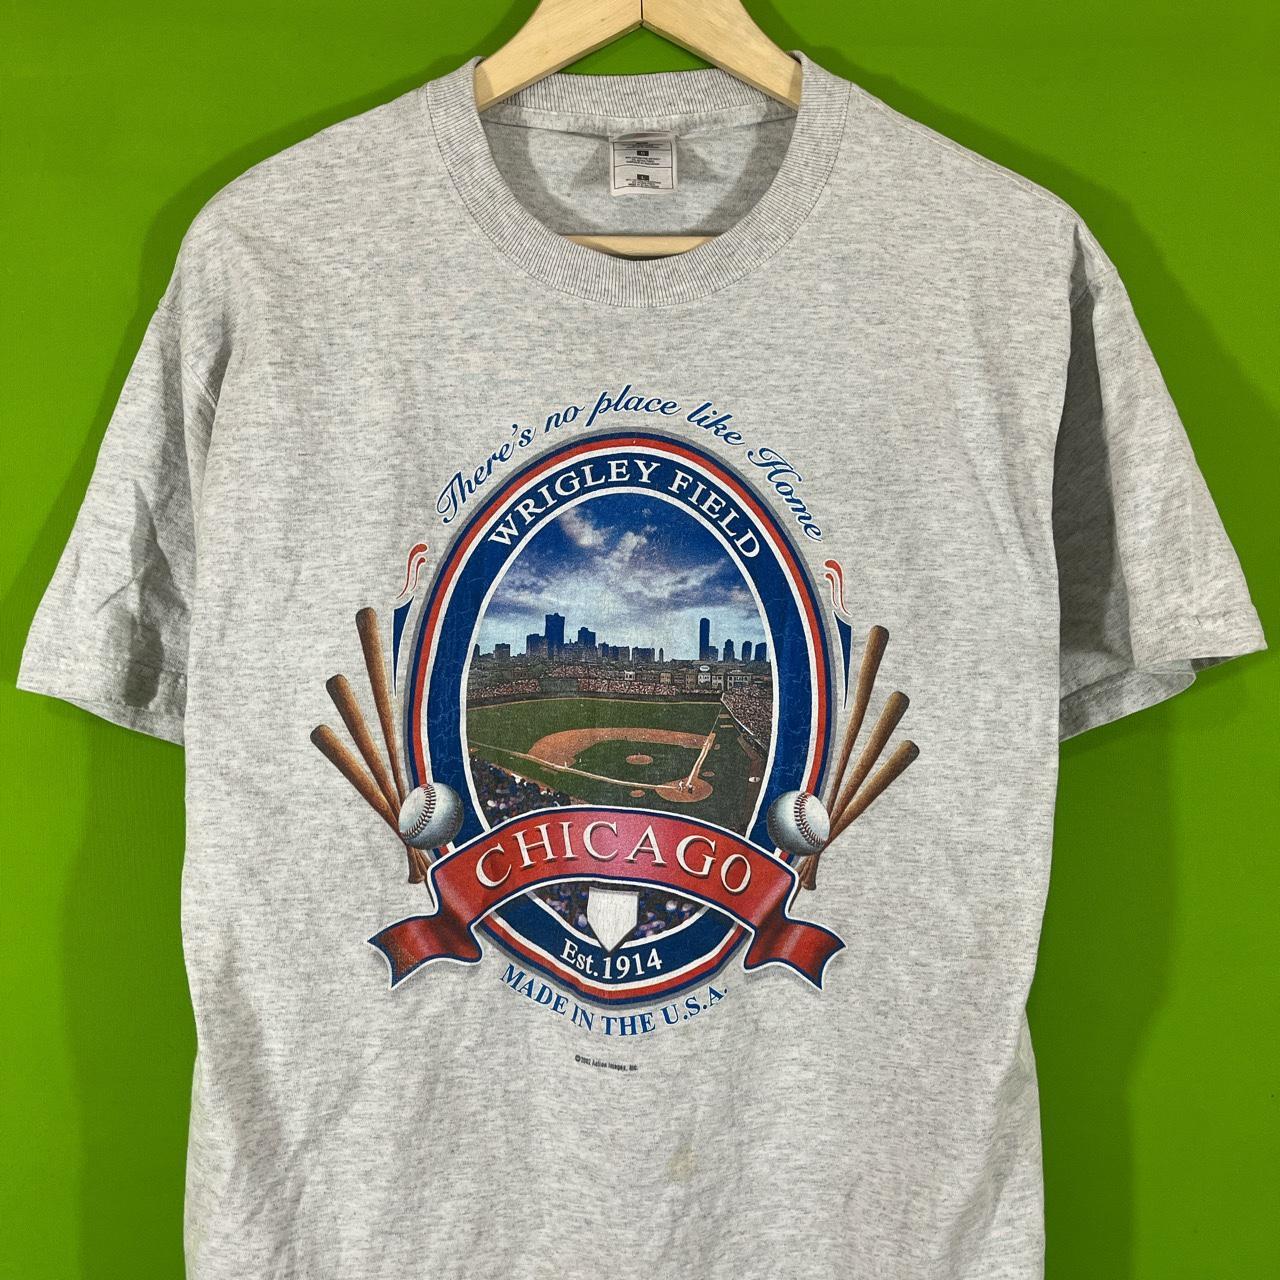 Wrigley Field' Men's T-Shirt